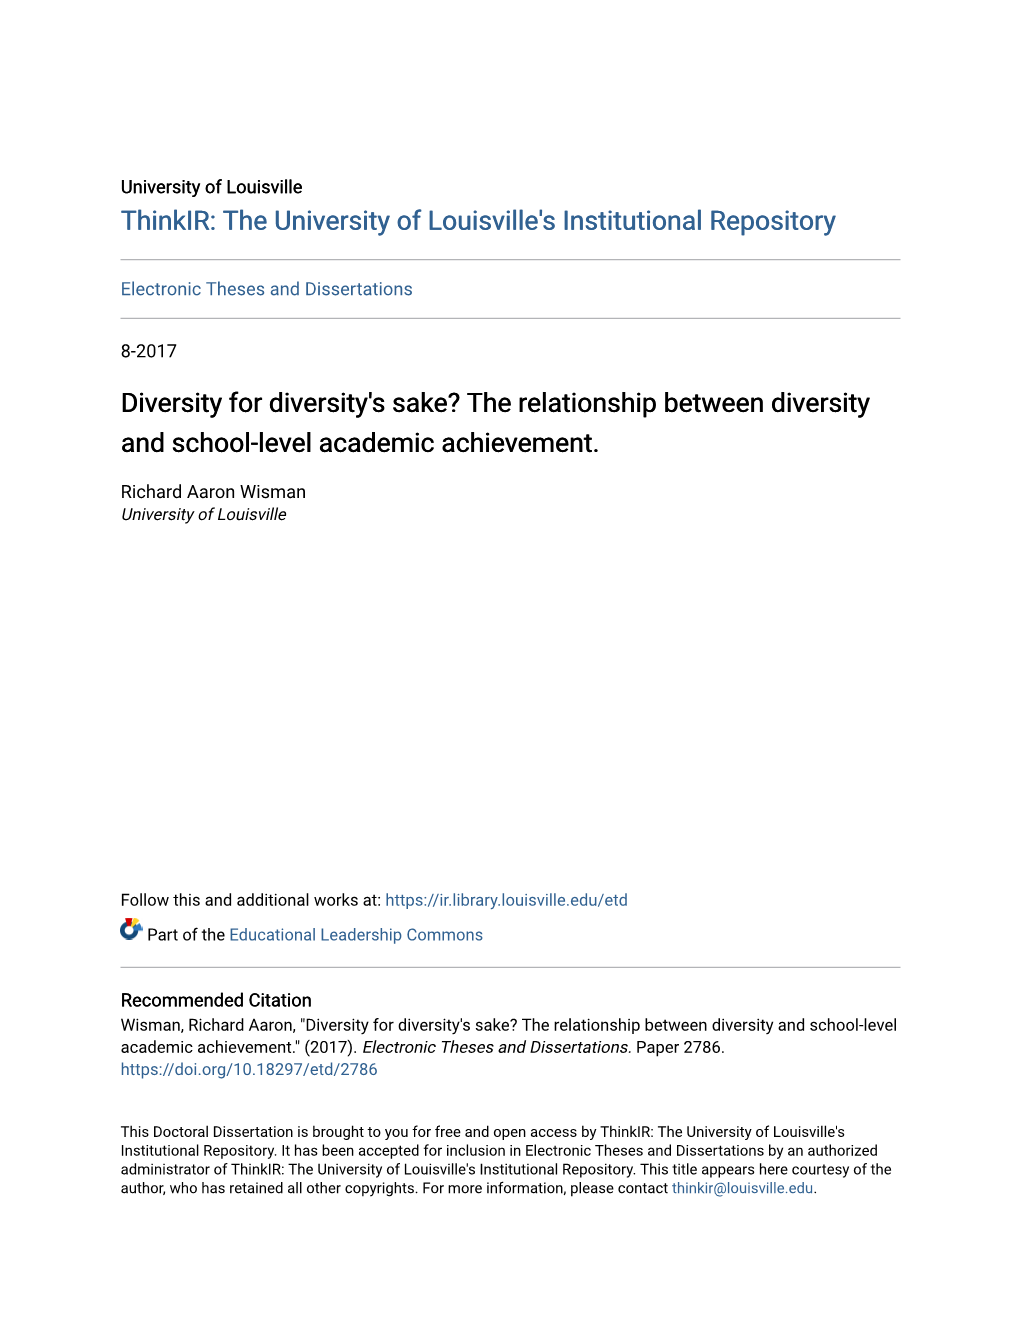 The Relationship Between Diversity and School-Level Academic Achievement